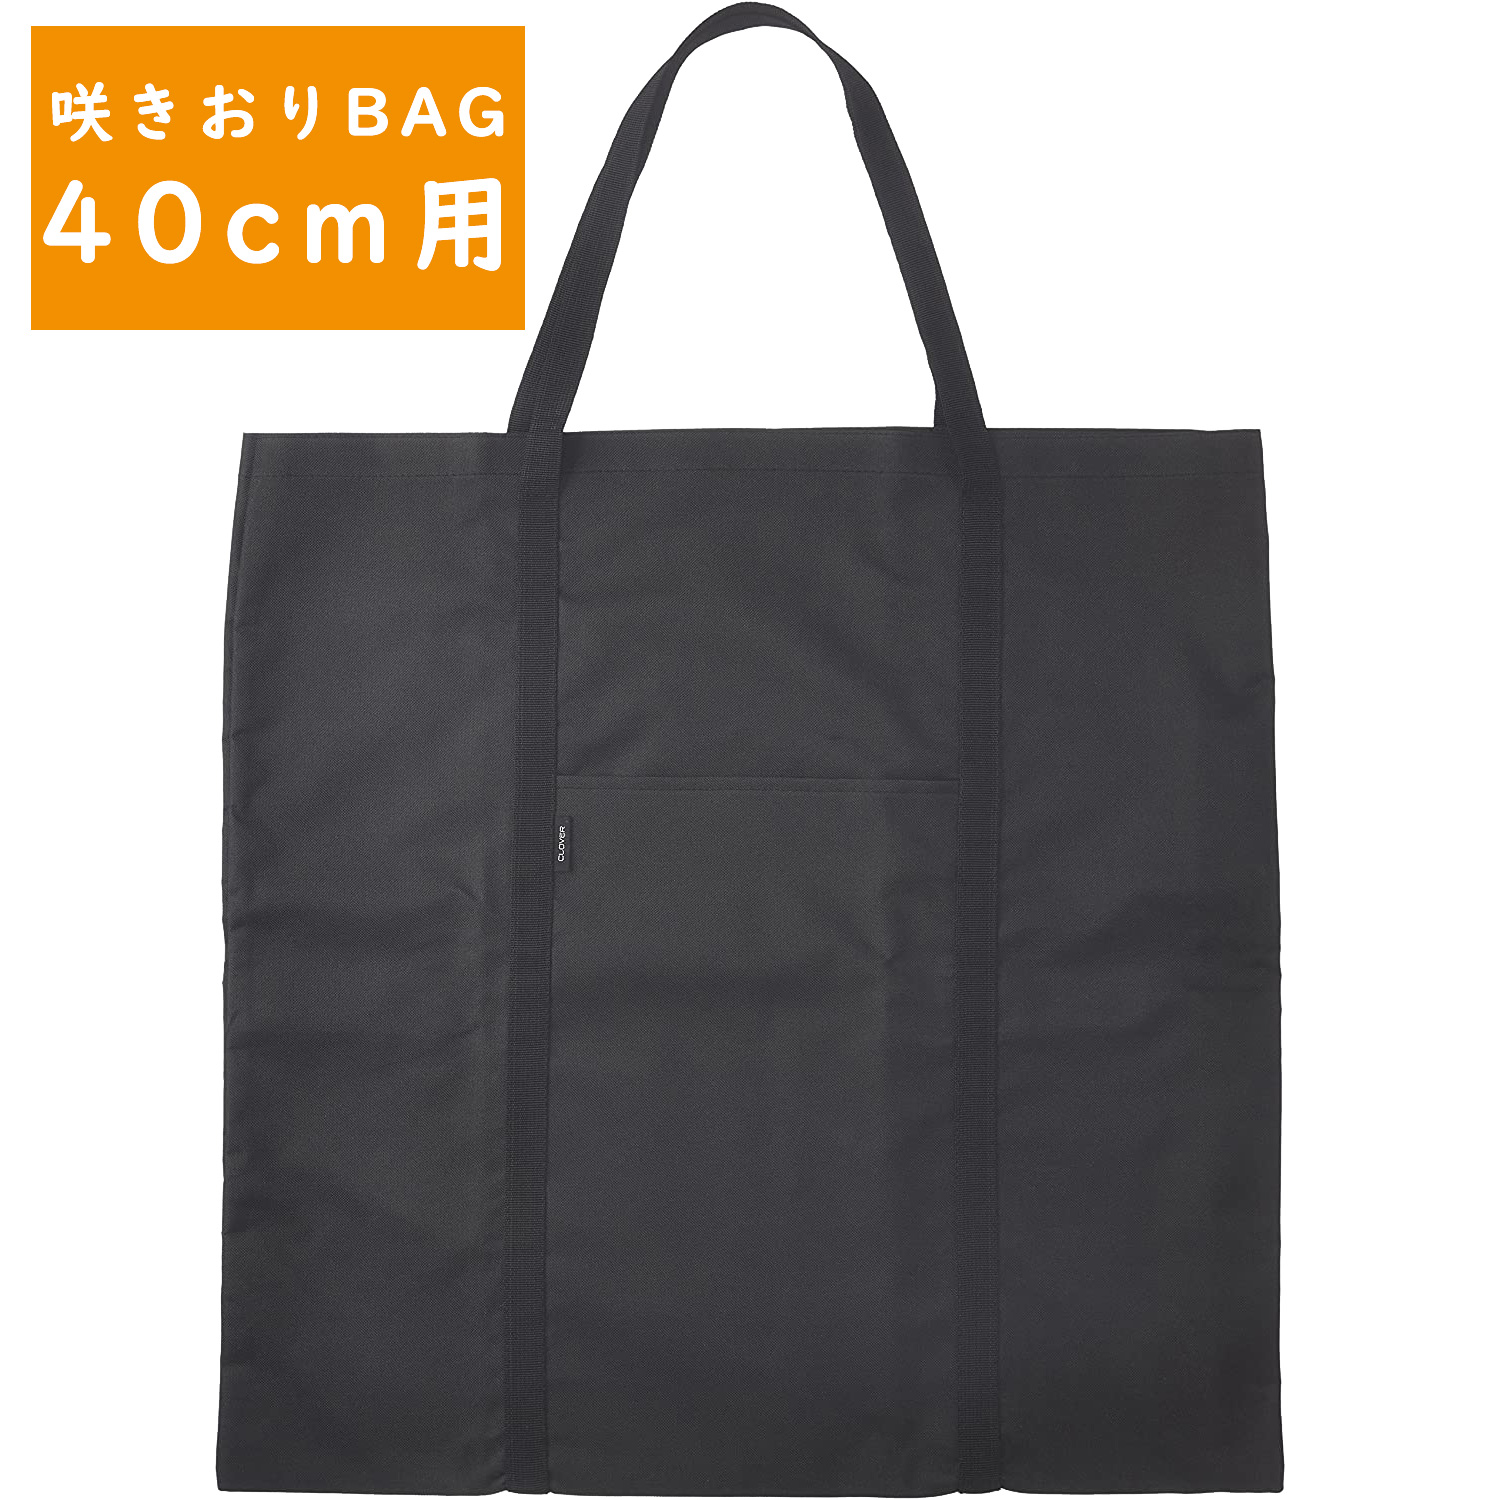 CL58-127 Sakiori Weaving Loom Bag [40cm] 640 x 640mm (pcs)